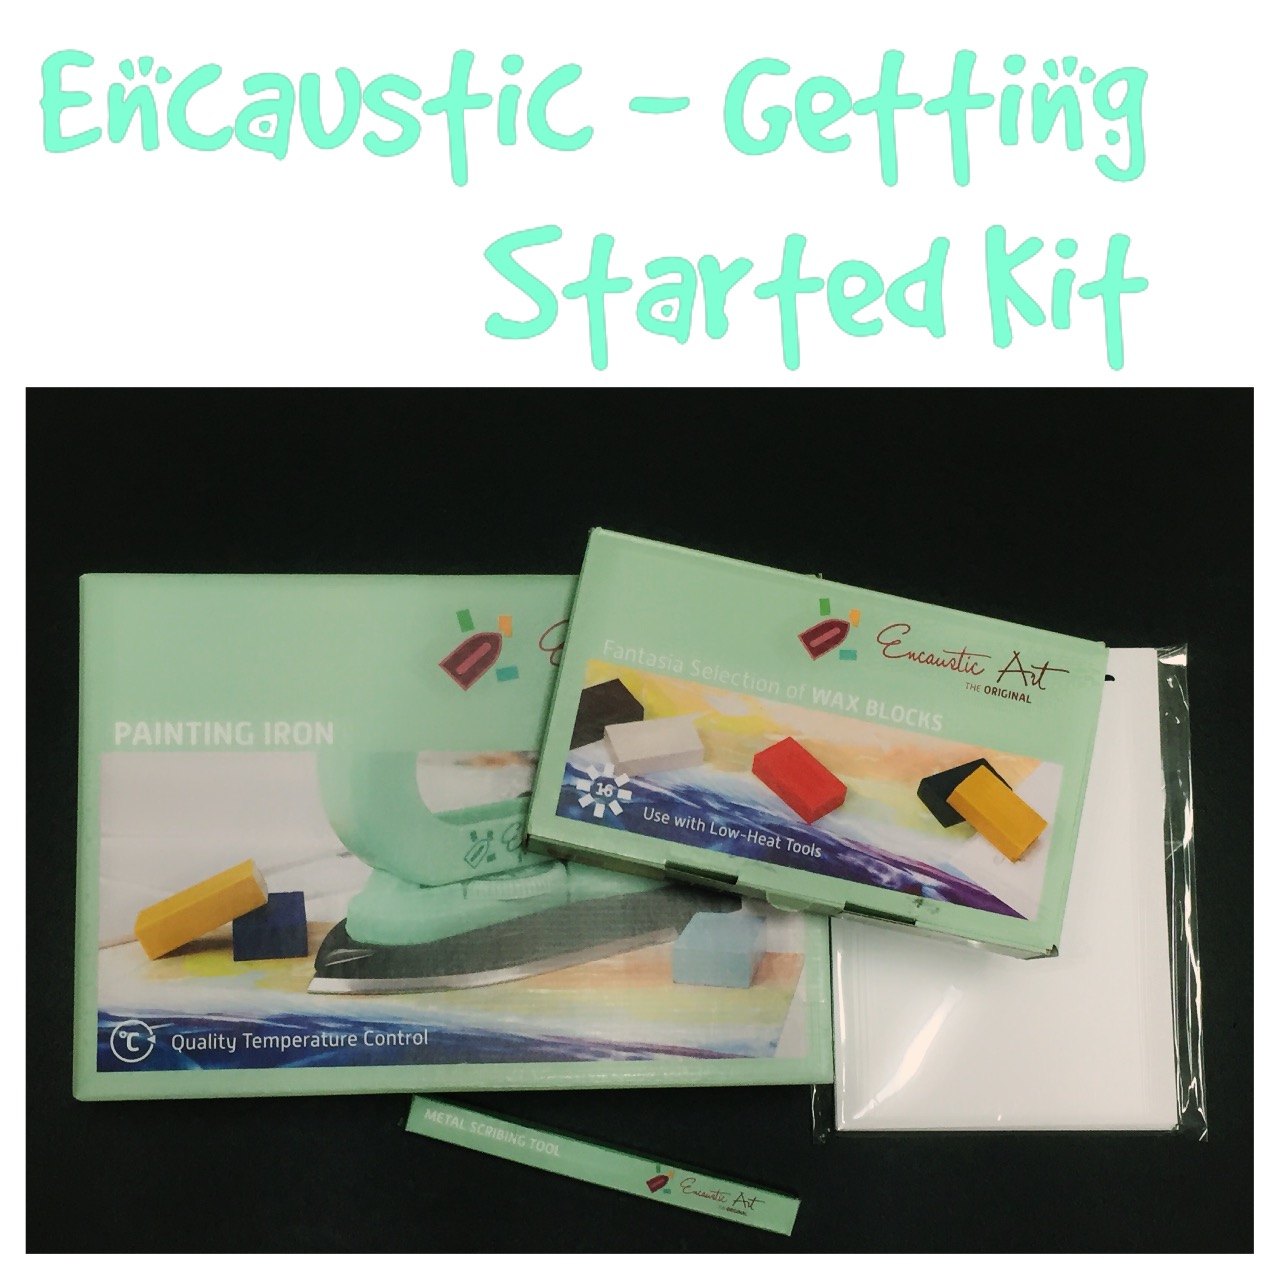 Encaustic Iron - Getting Started Encaustic Kit